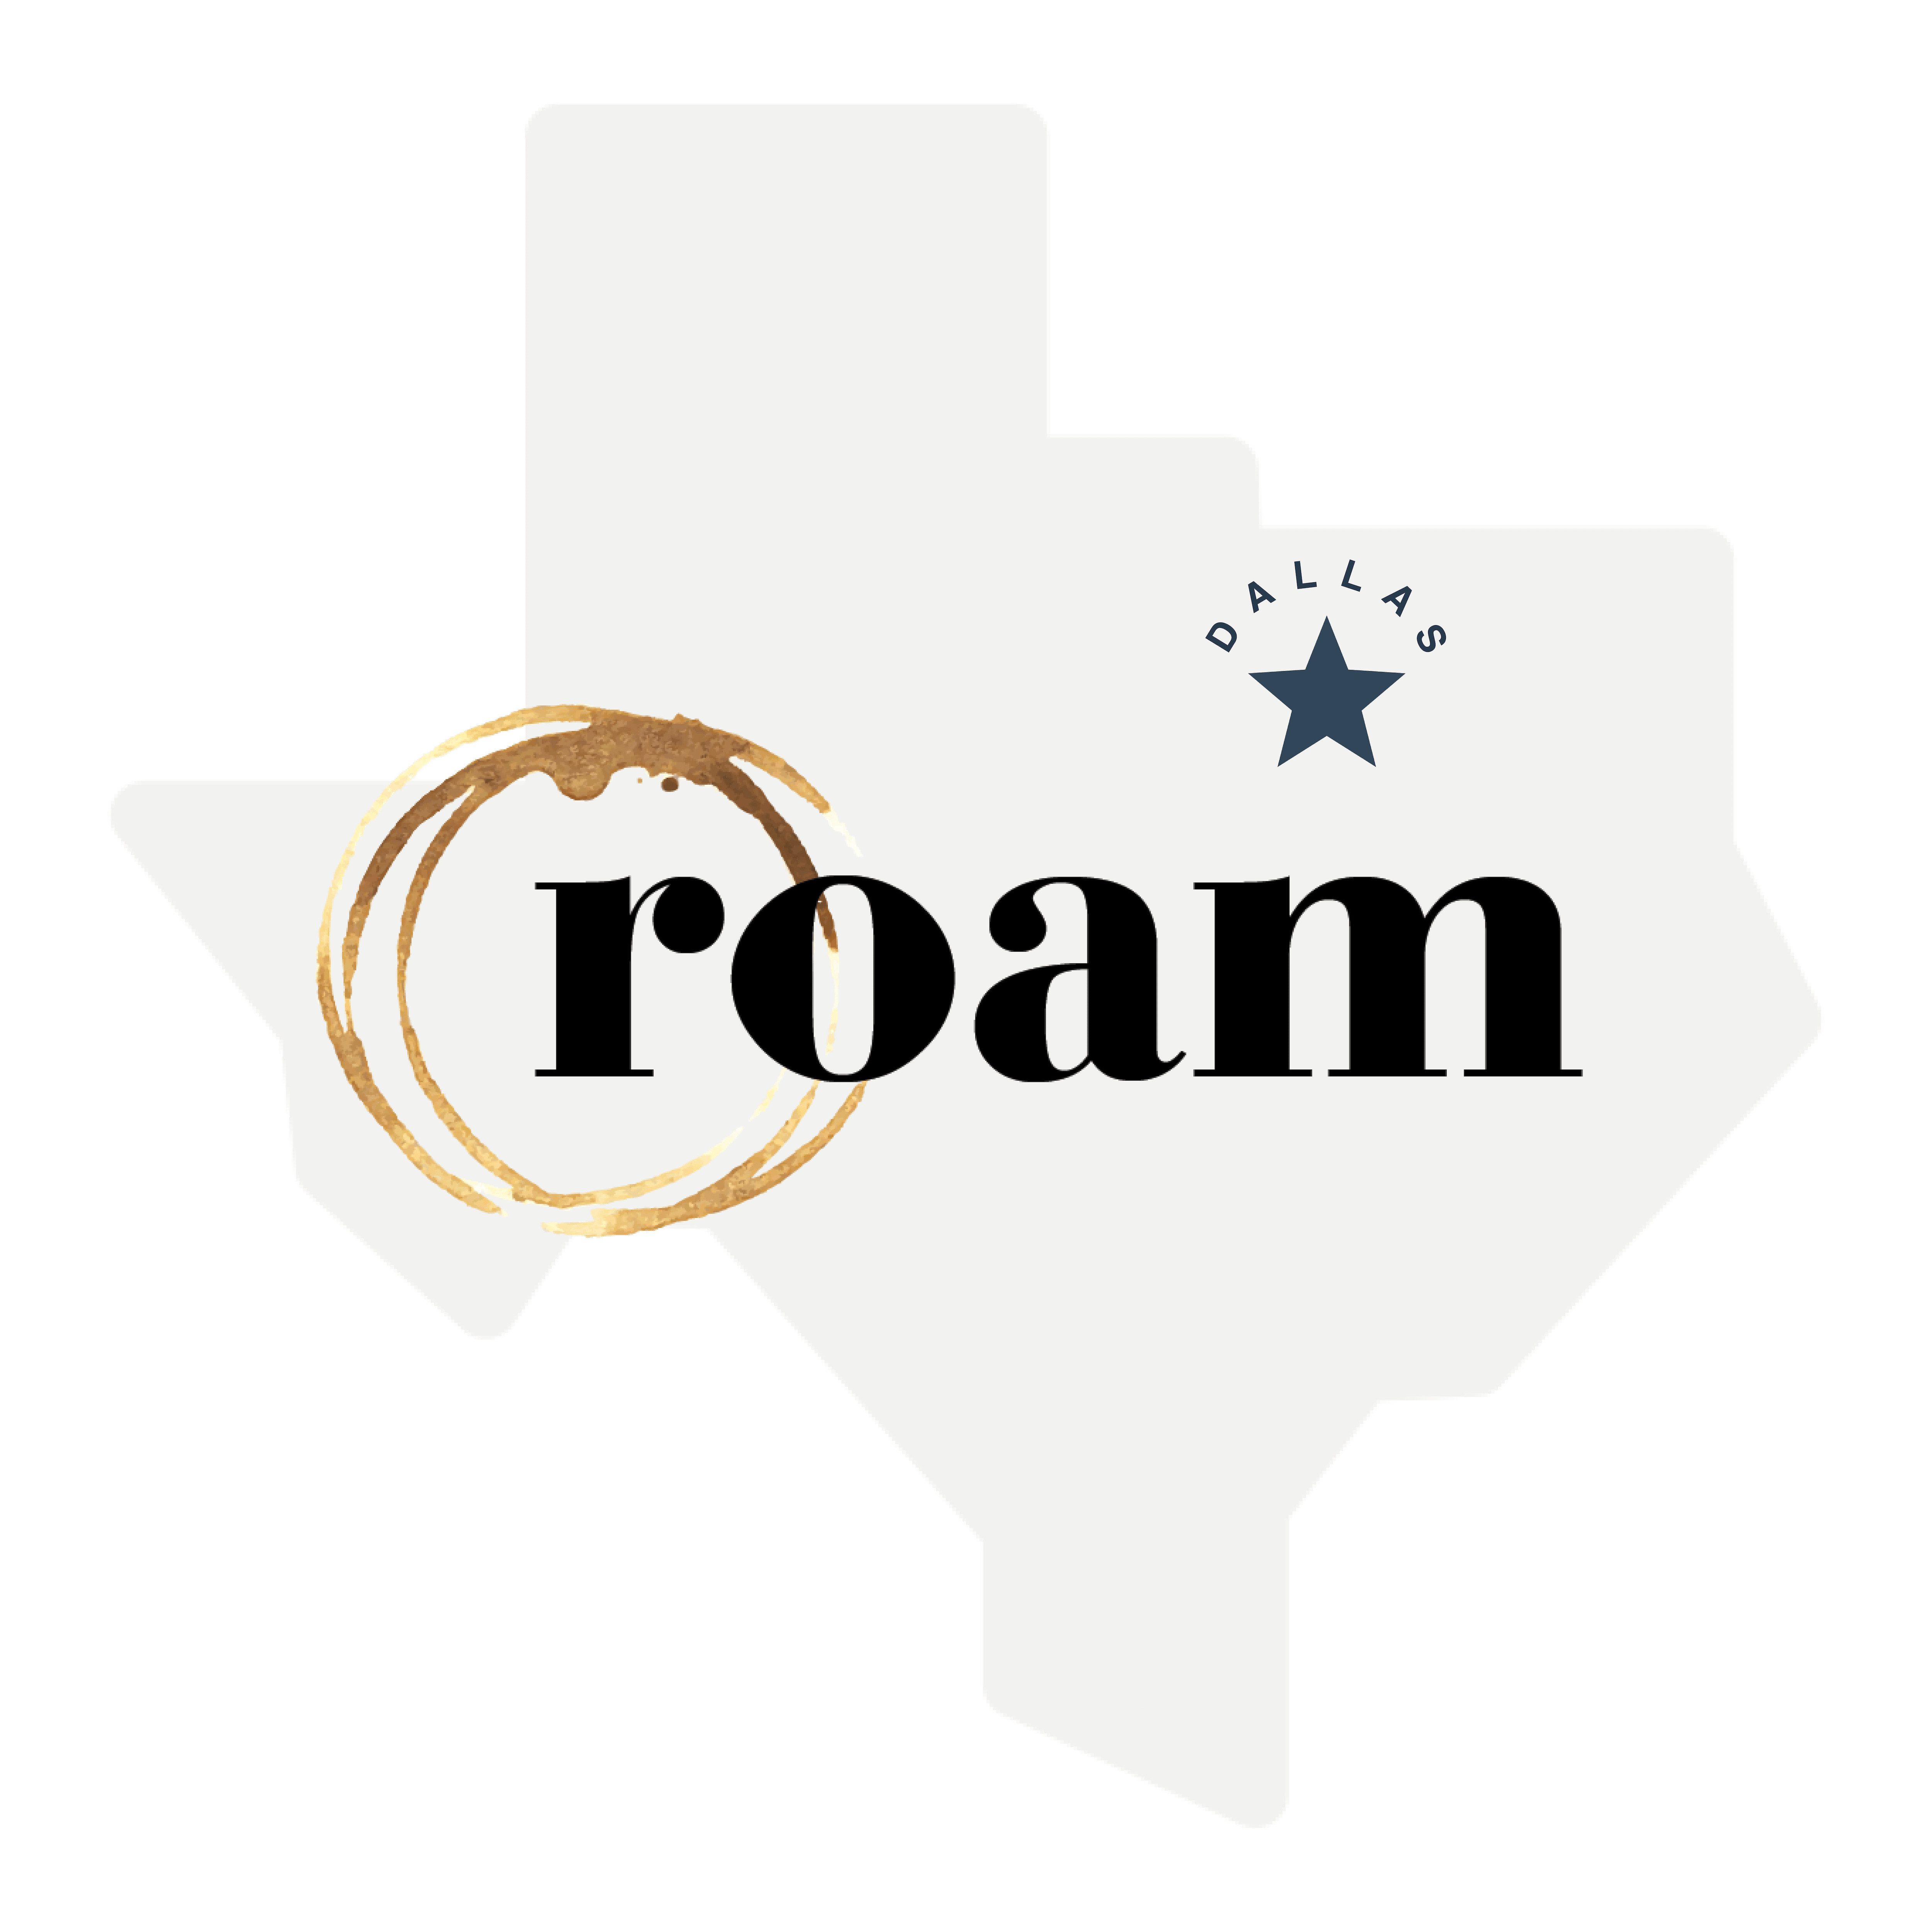 Roam coming to Dallas, Texas early 2023 - The Colony - Grandscape